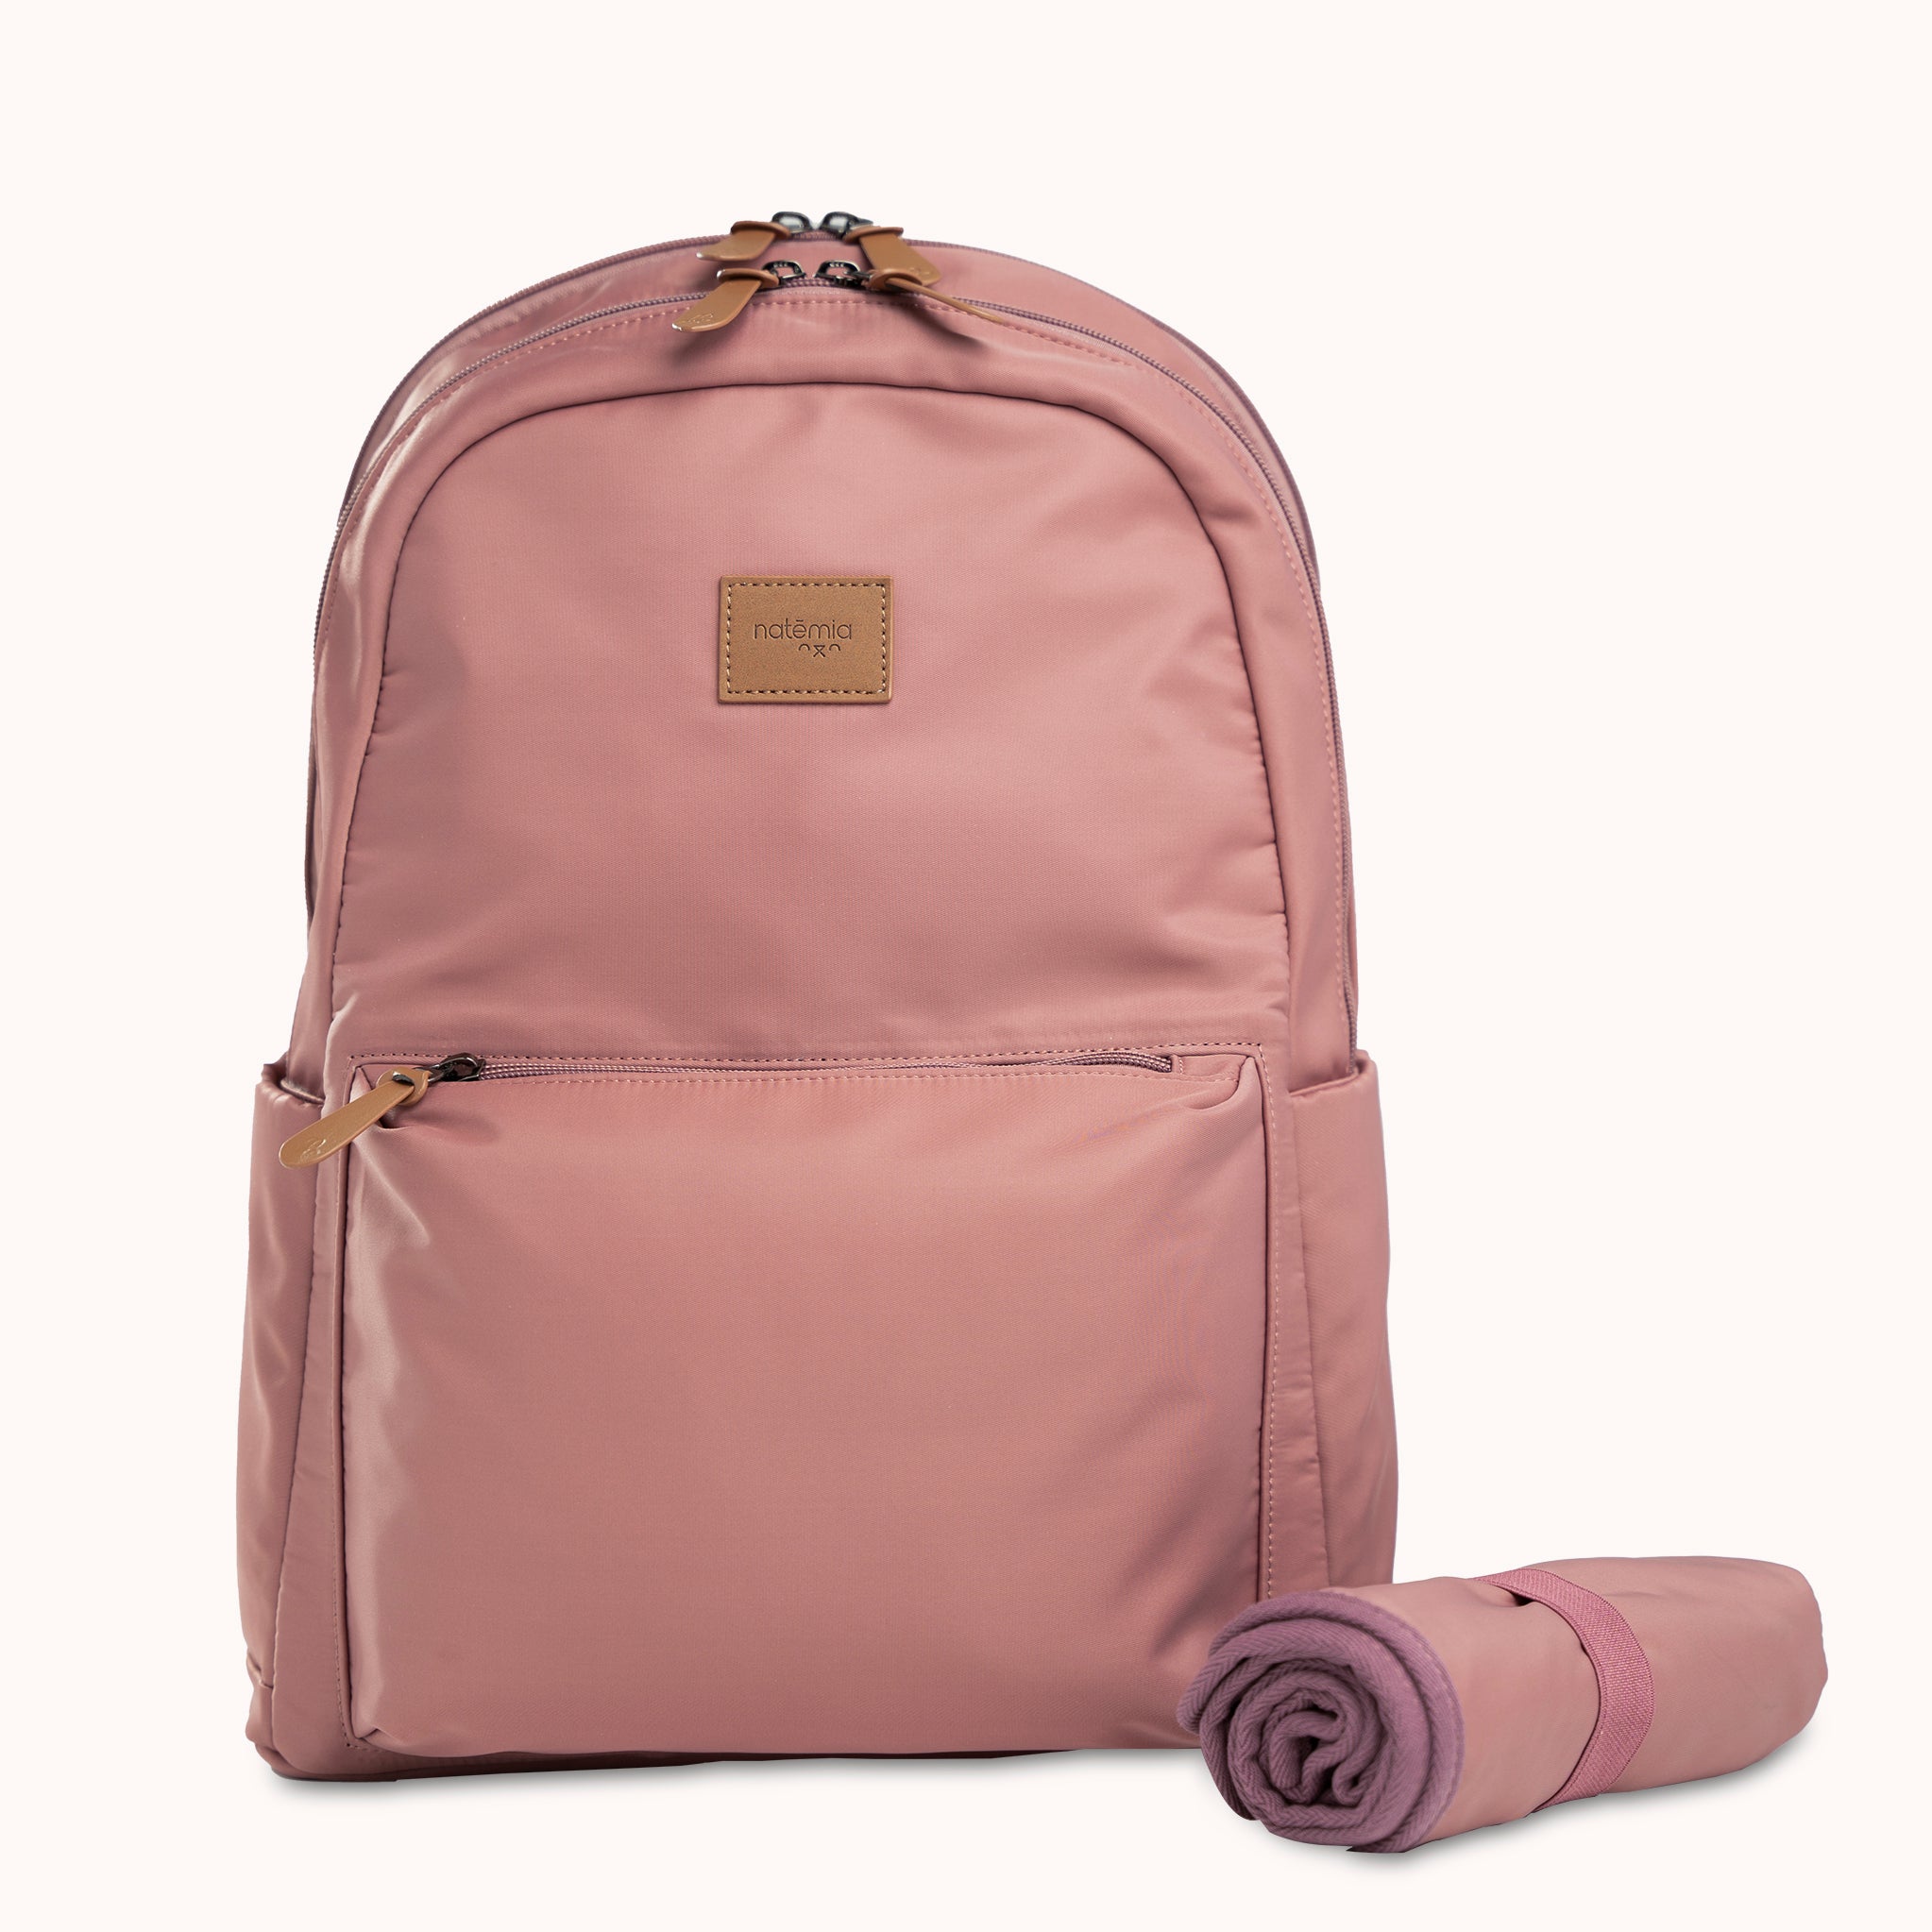 Diaper Backpack in Rose - Natemia